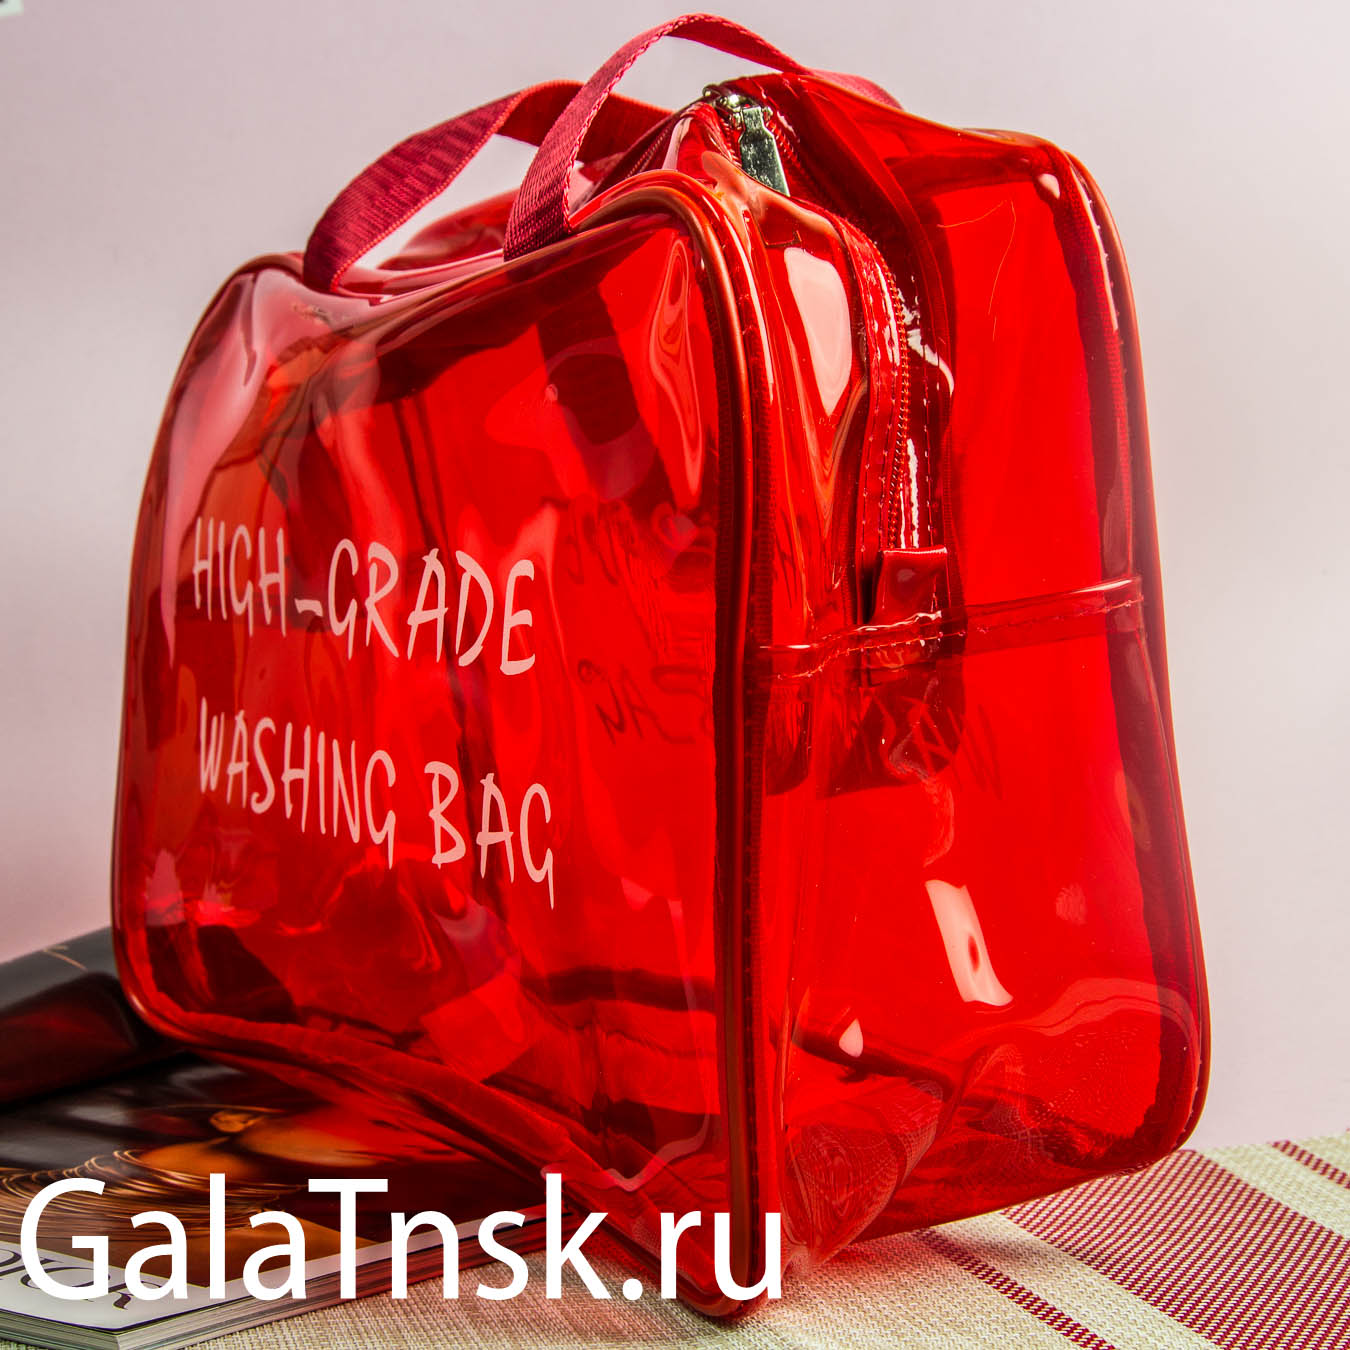 BirinD Косметичка для душа HIGH-GRADE WASHING BAG 335598 красный 